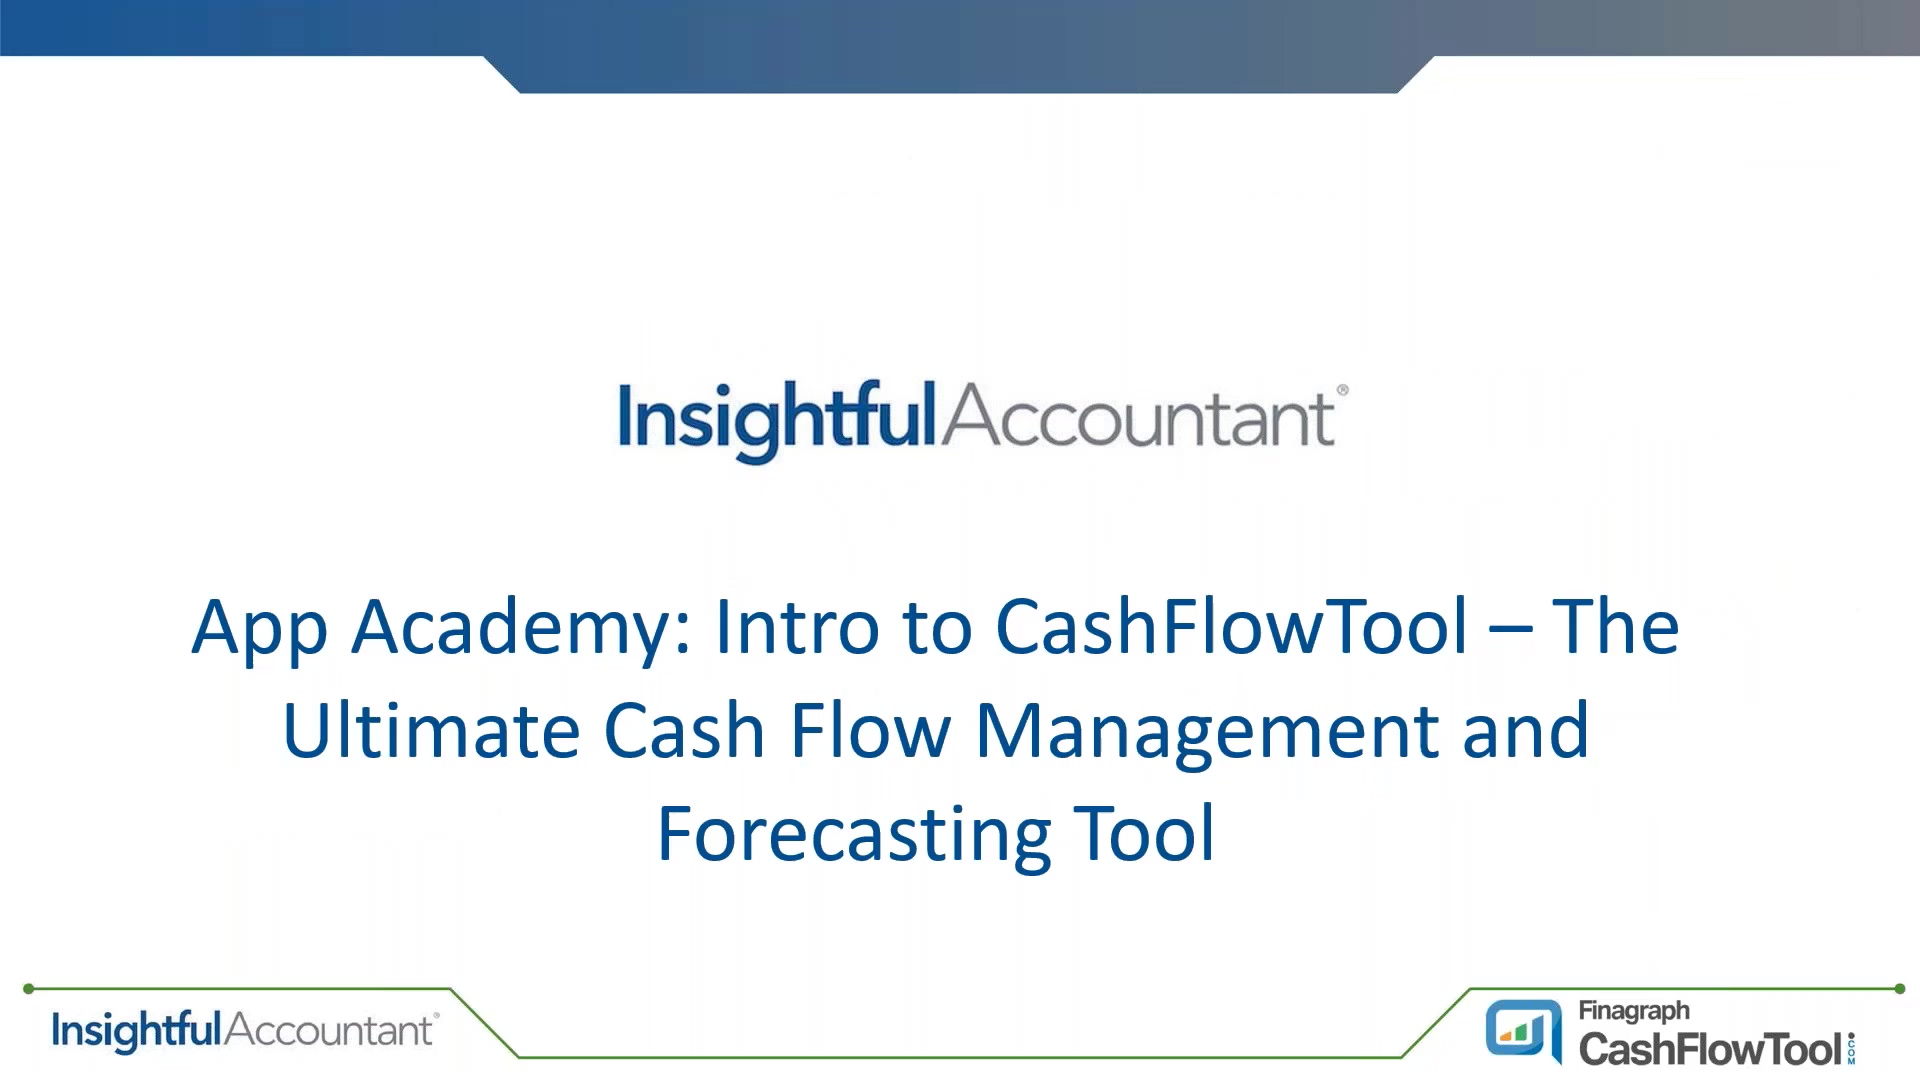 20190813 App Academy Intro to CashFlowTool The Ultimate Cash Flow Management and Forecasting Tool (u